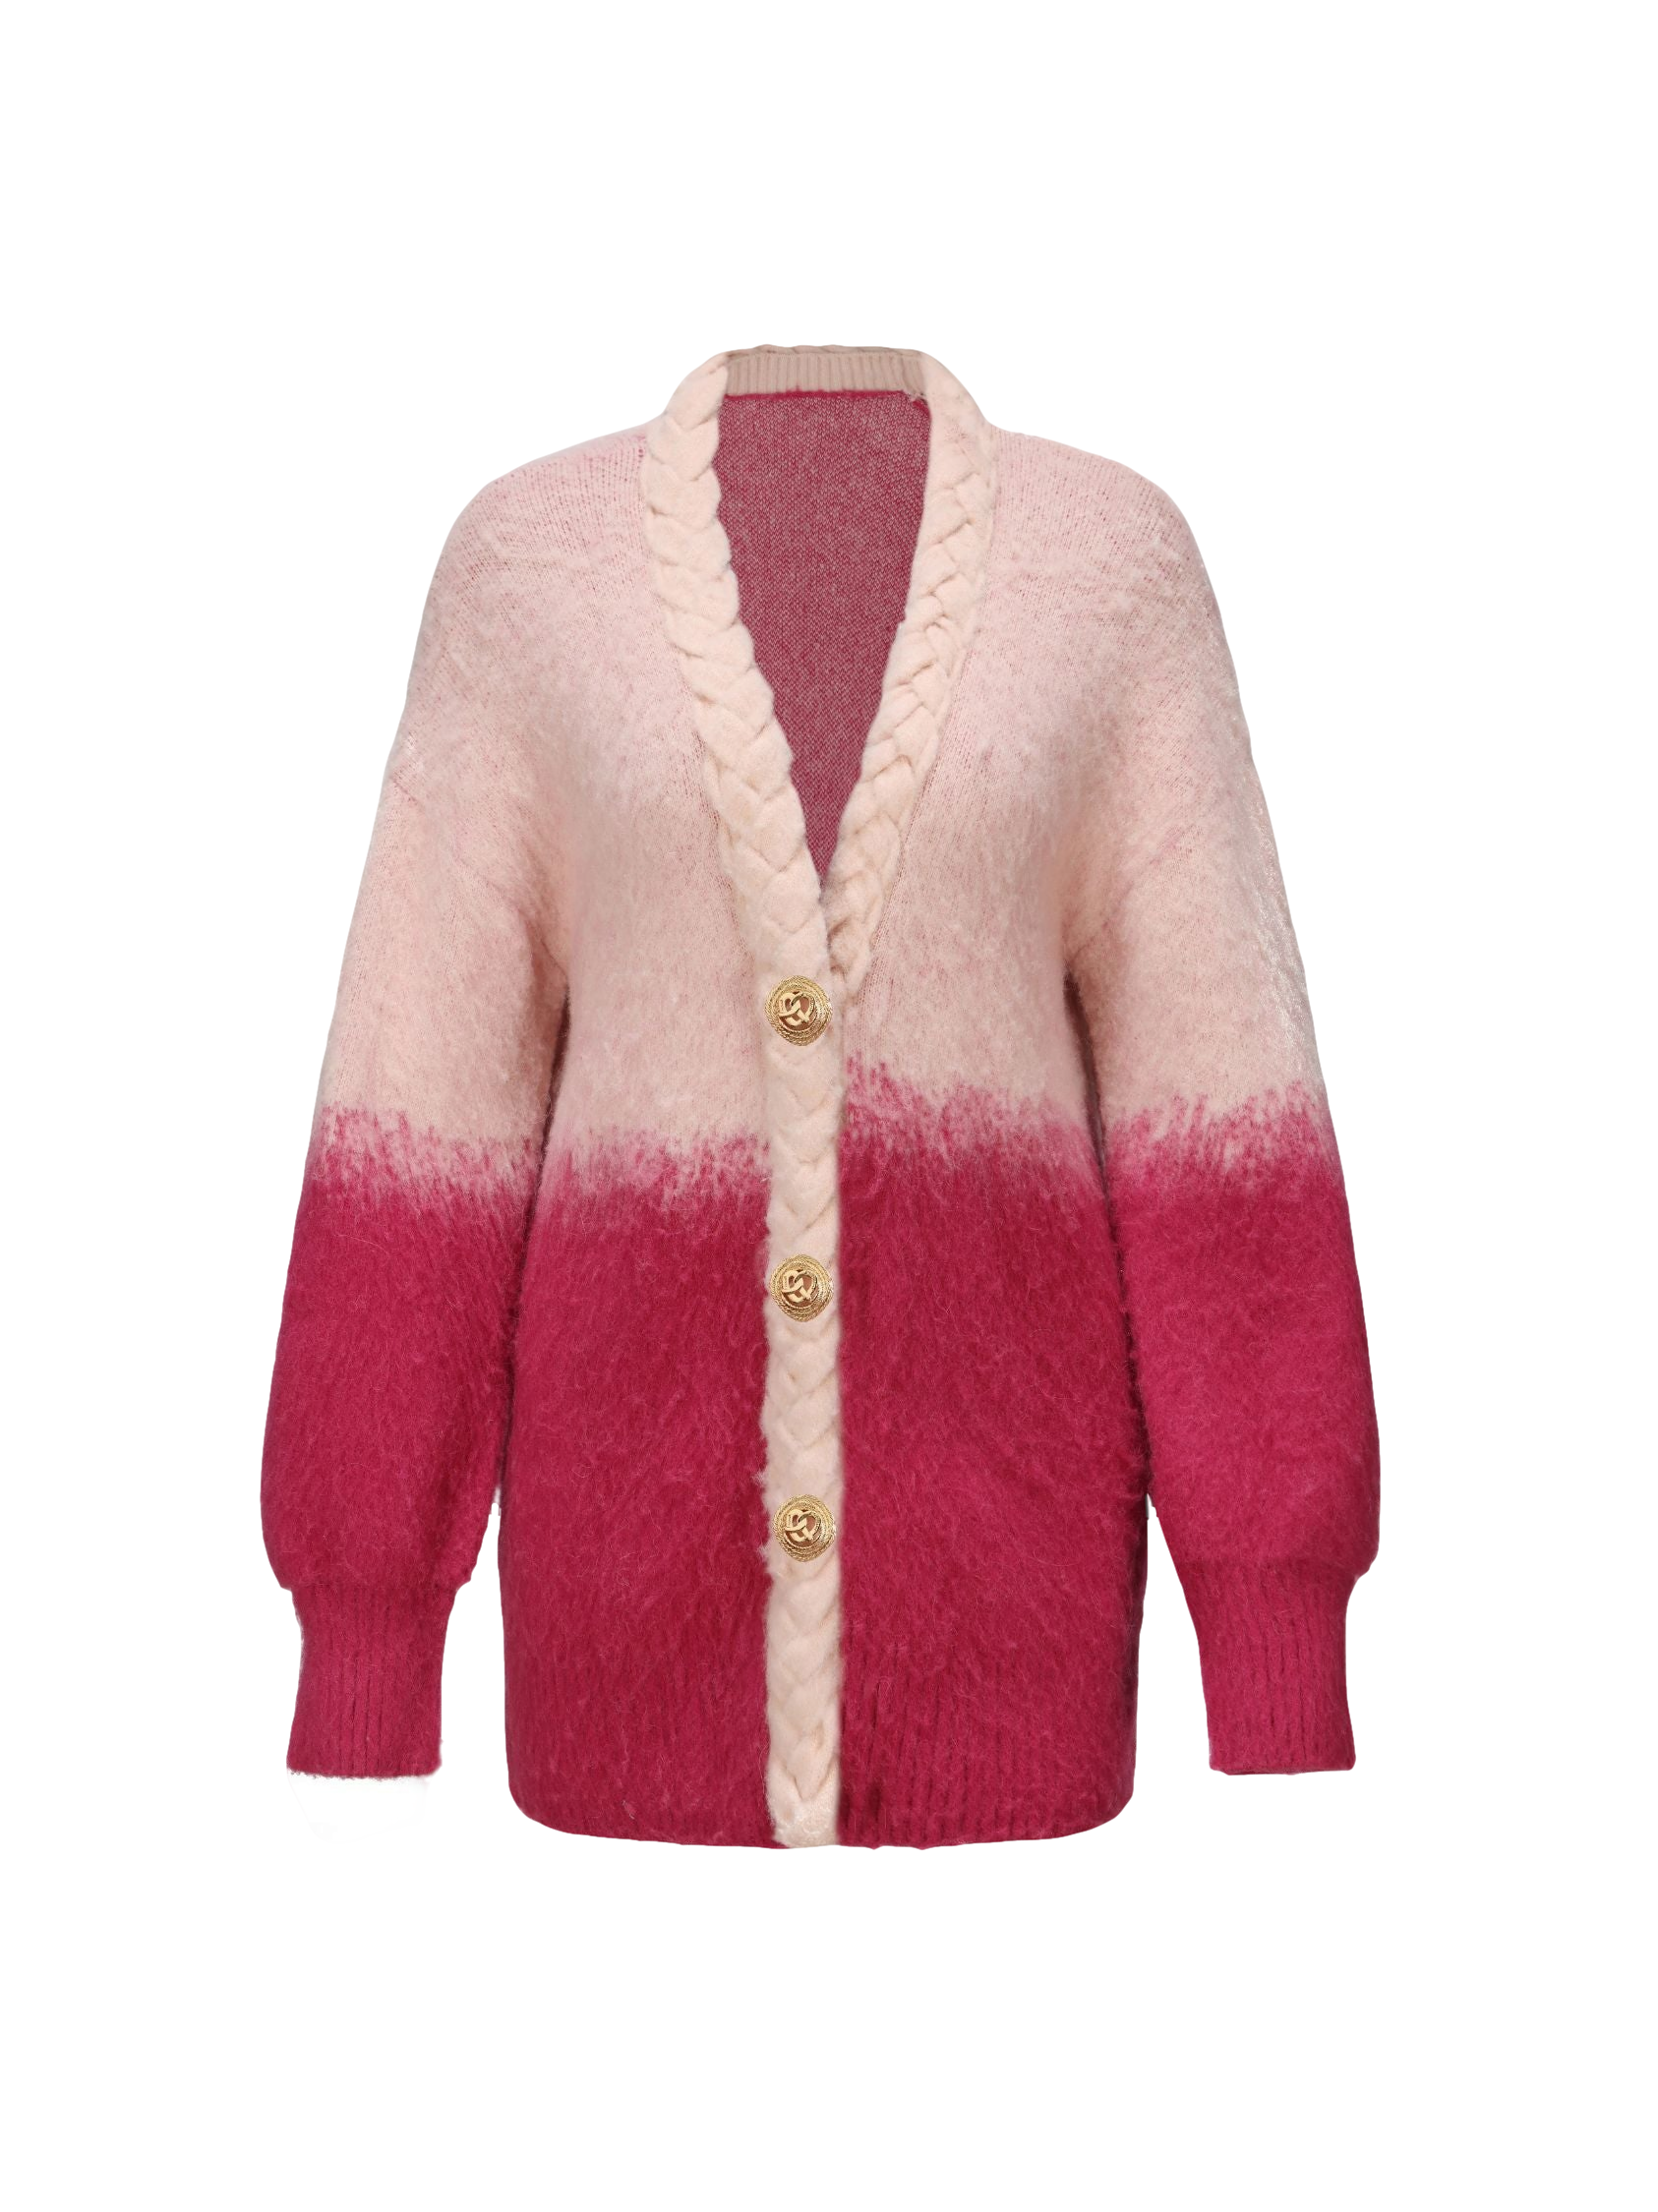 Nana Jacqueline Daphne Diamond Knit Cardigan (pink)